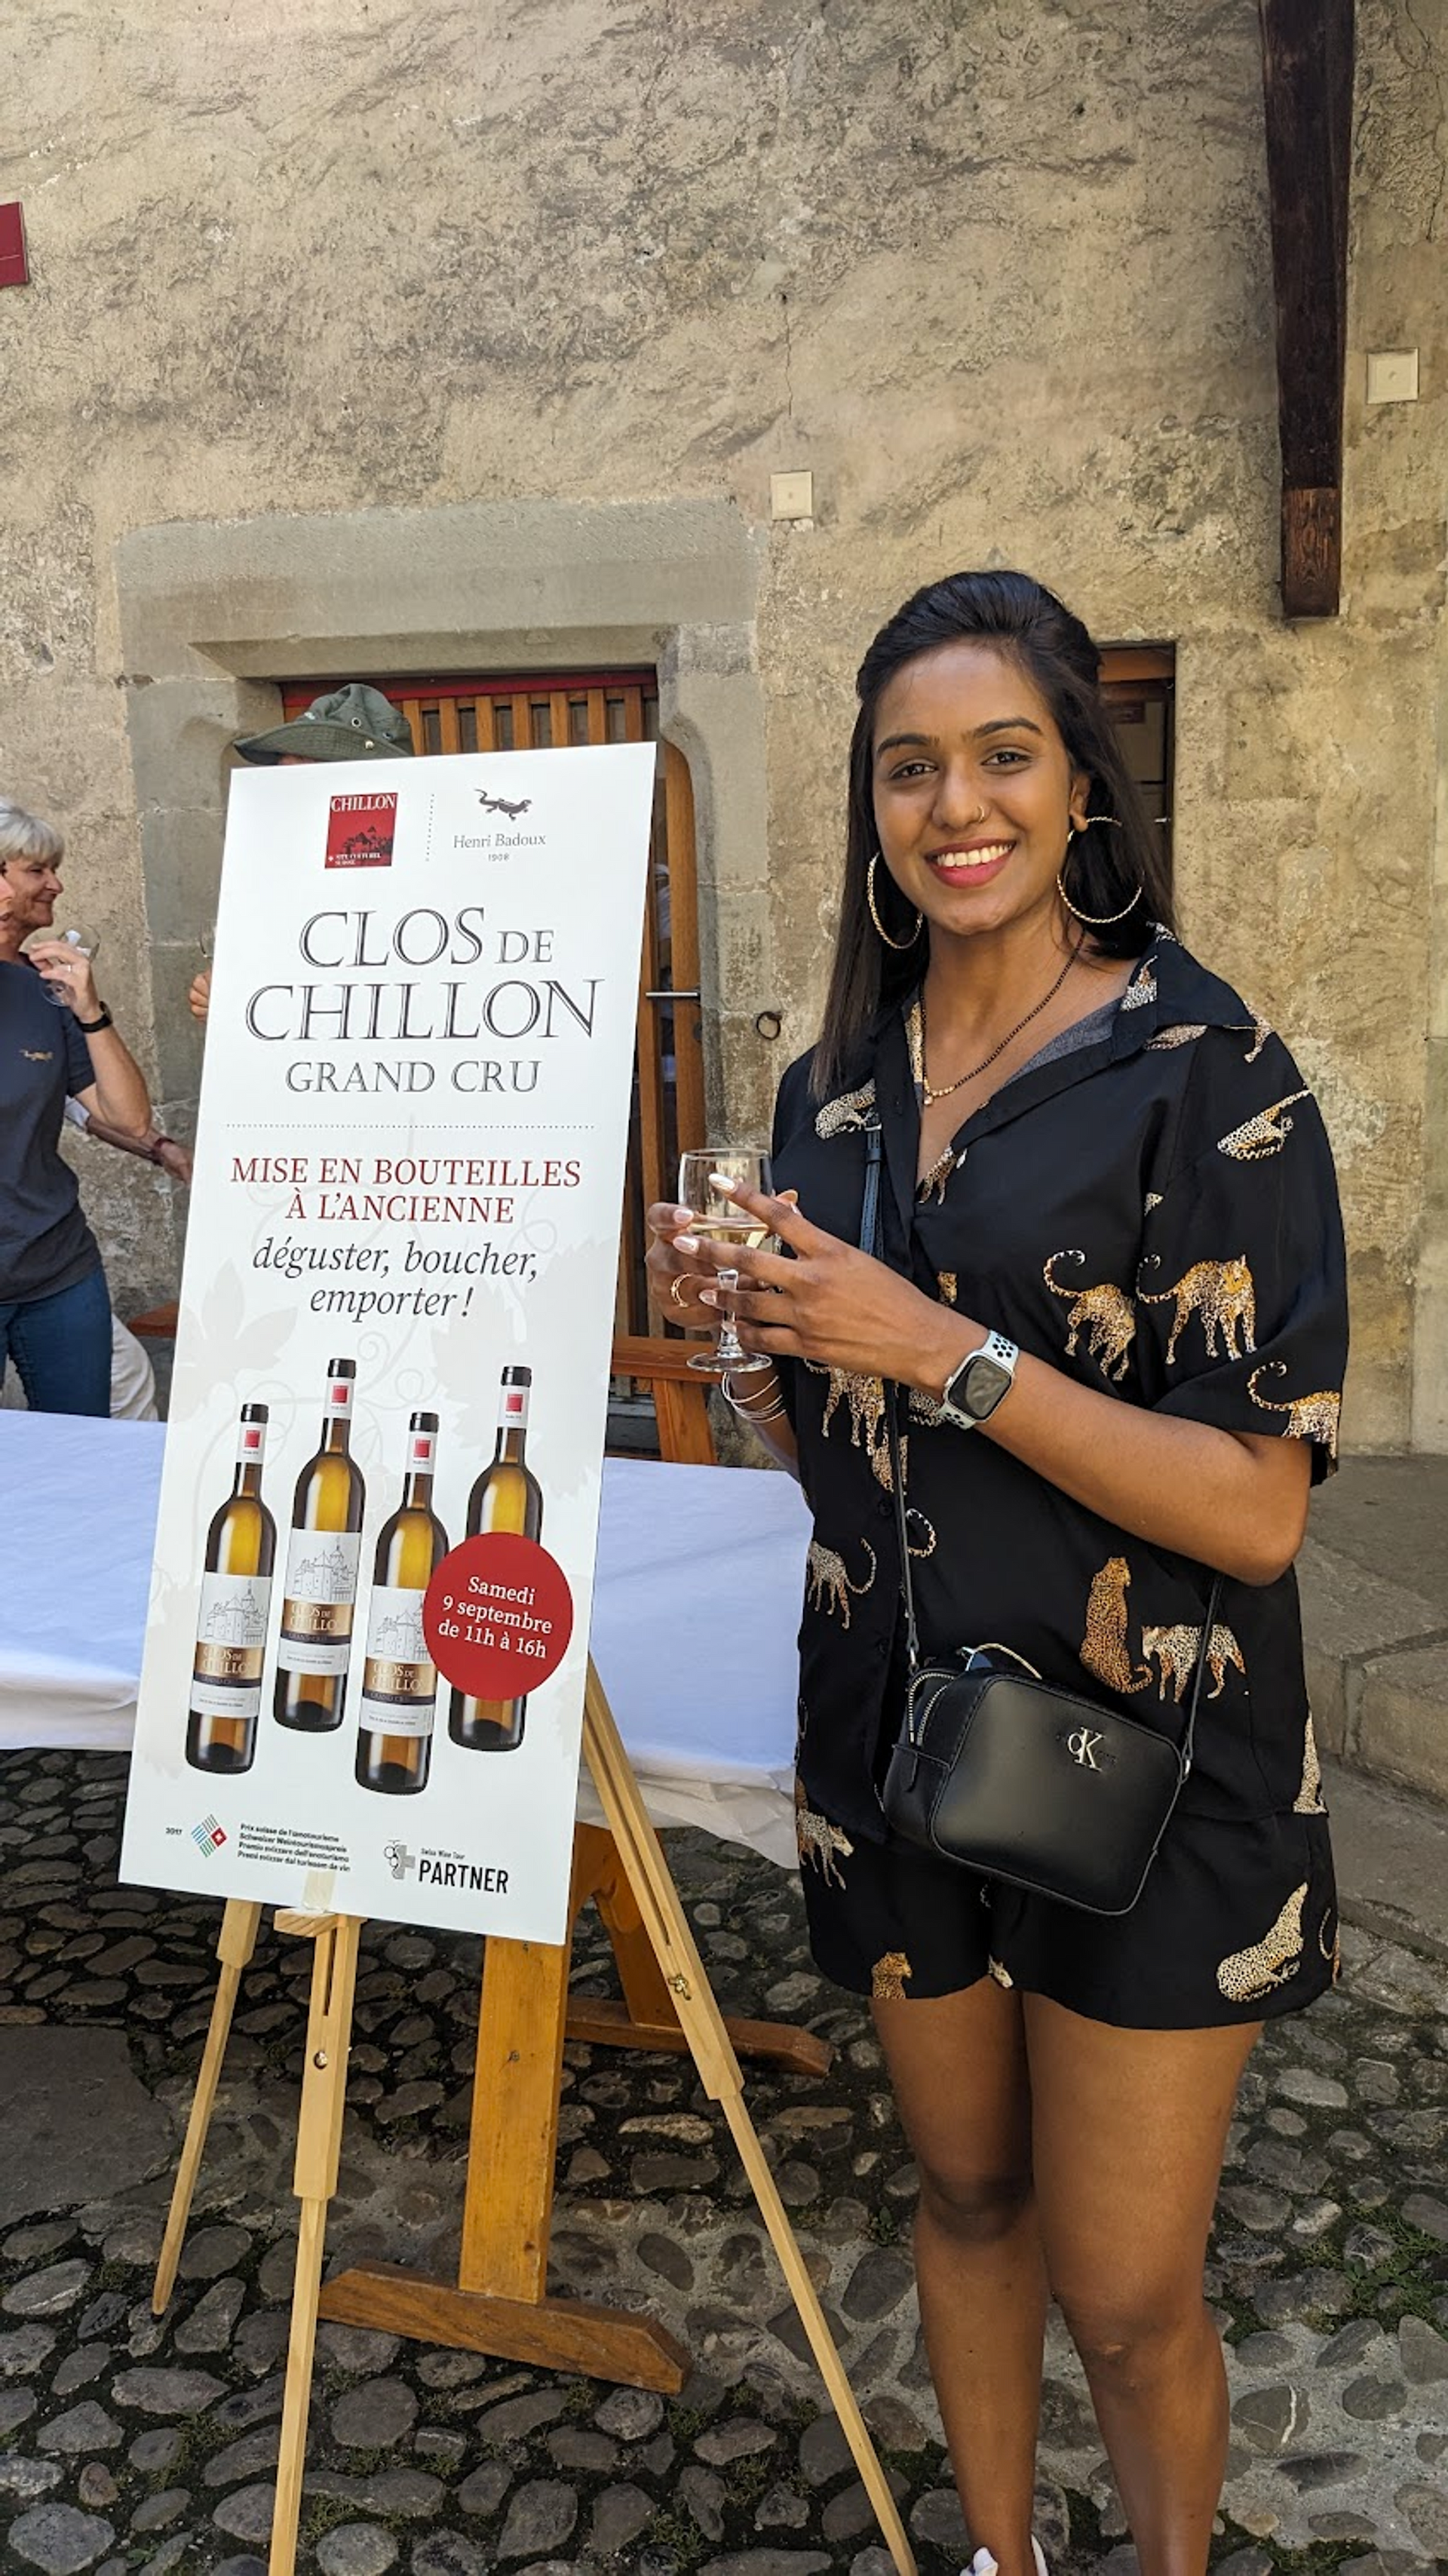 Dana tasting the famous Clos de Chillon